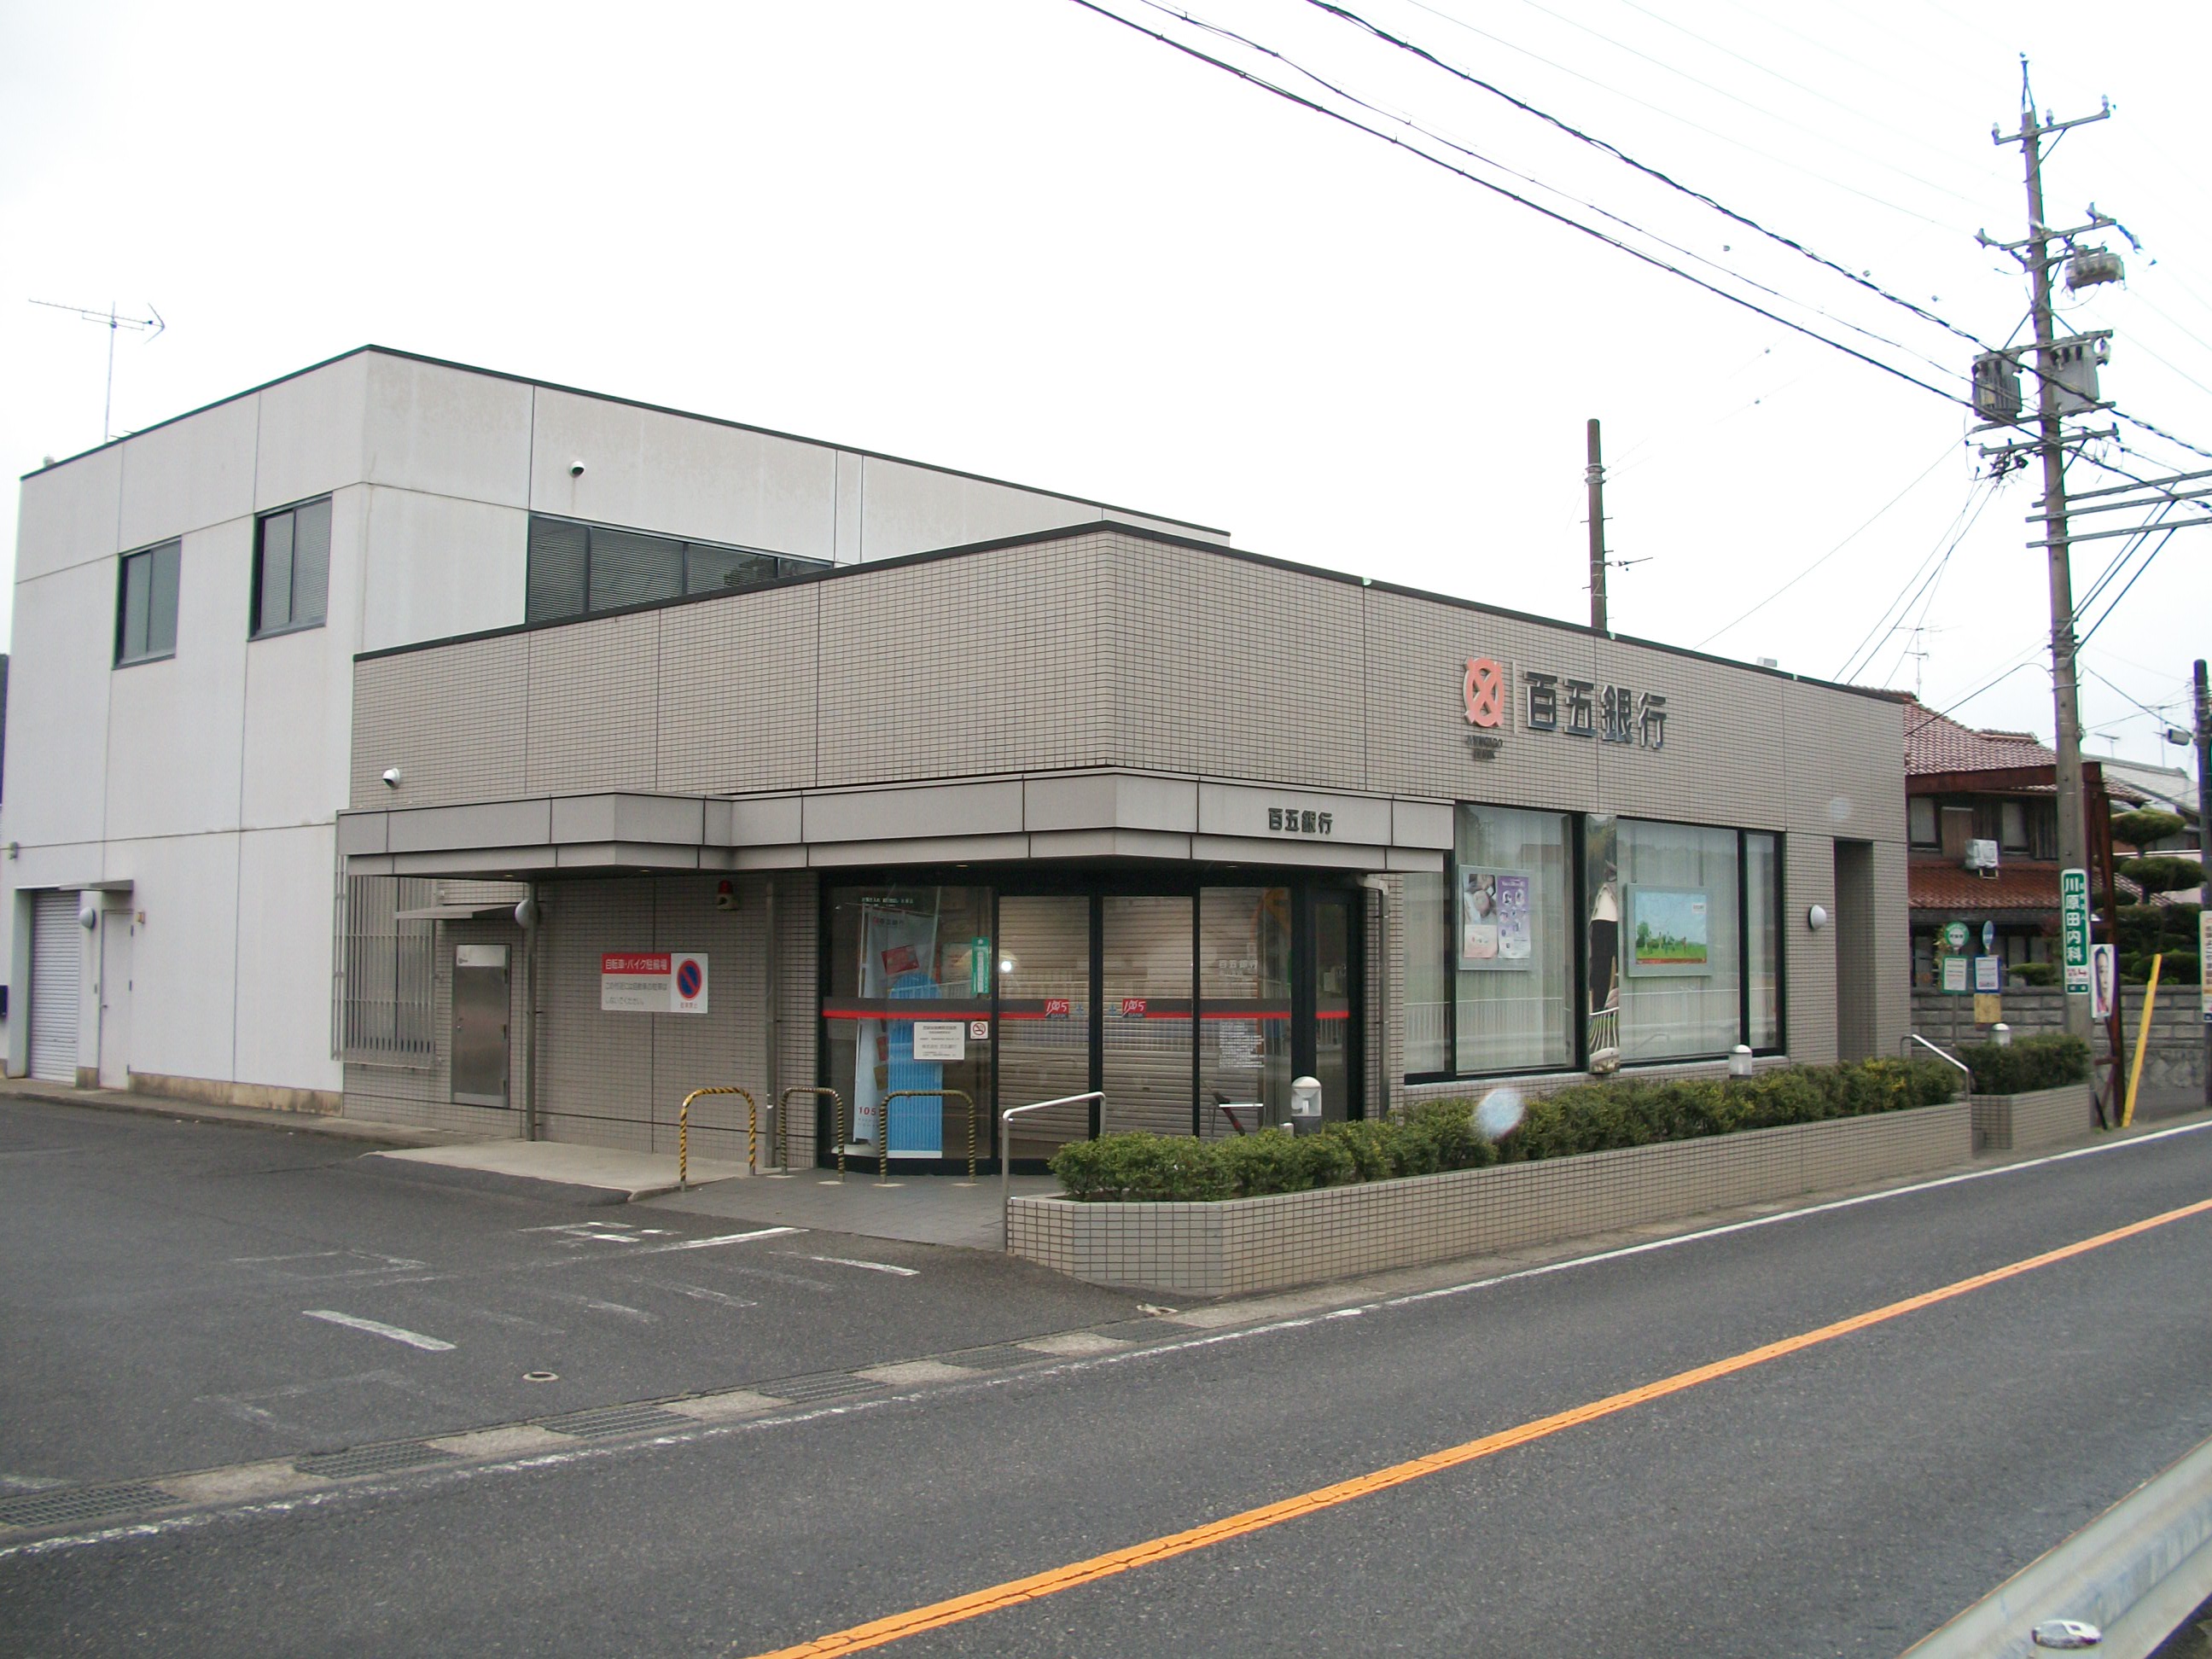 Bank. 771m until Hyakugo Aoyama Branch (Bank)